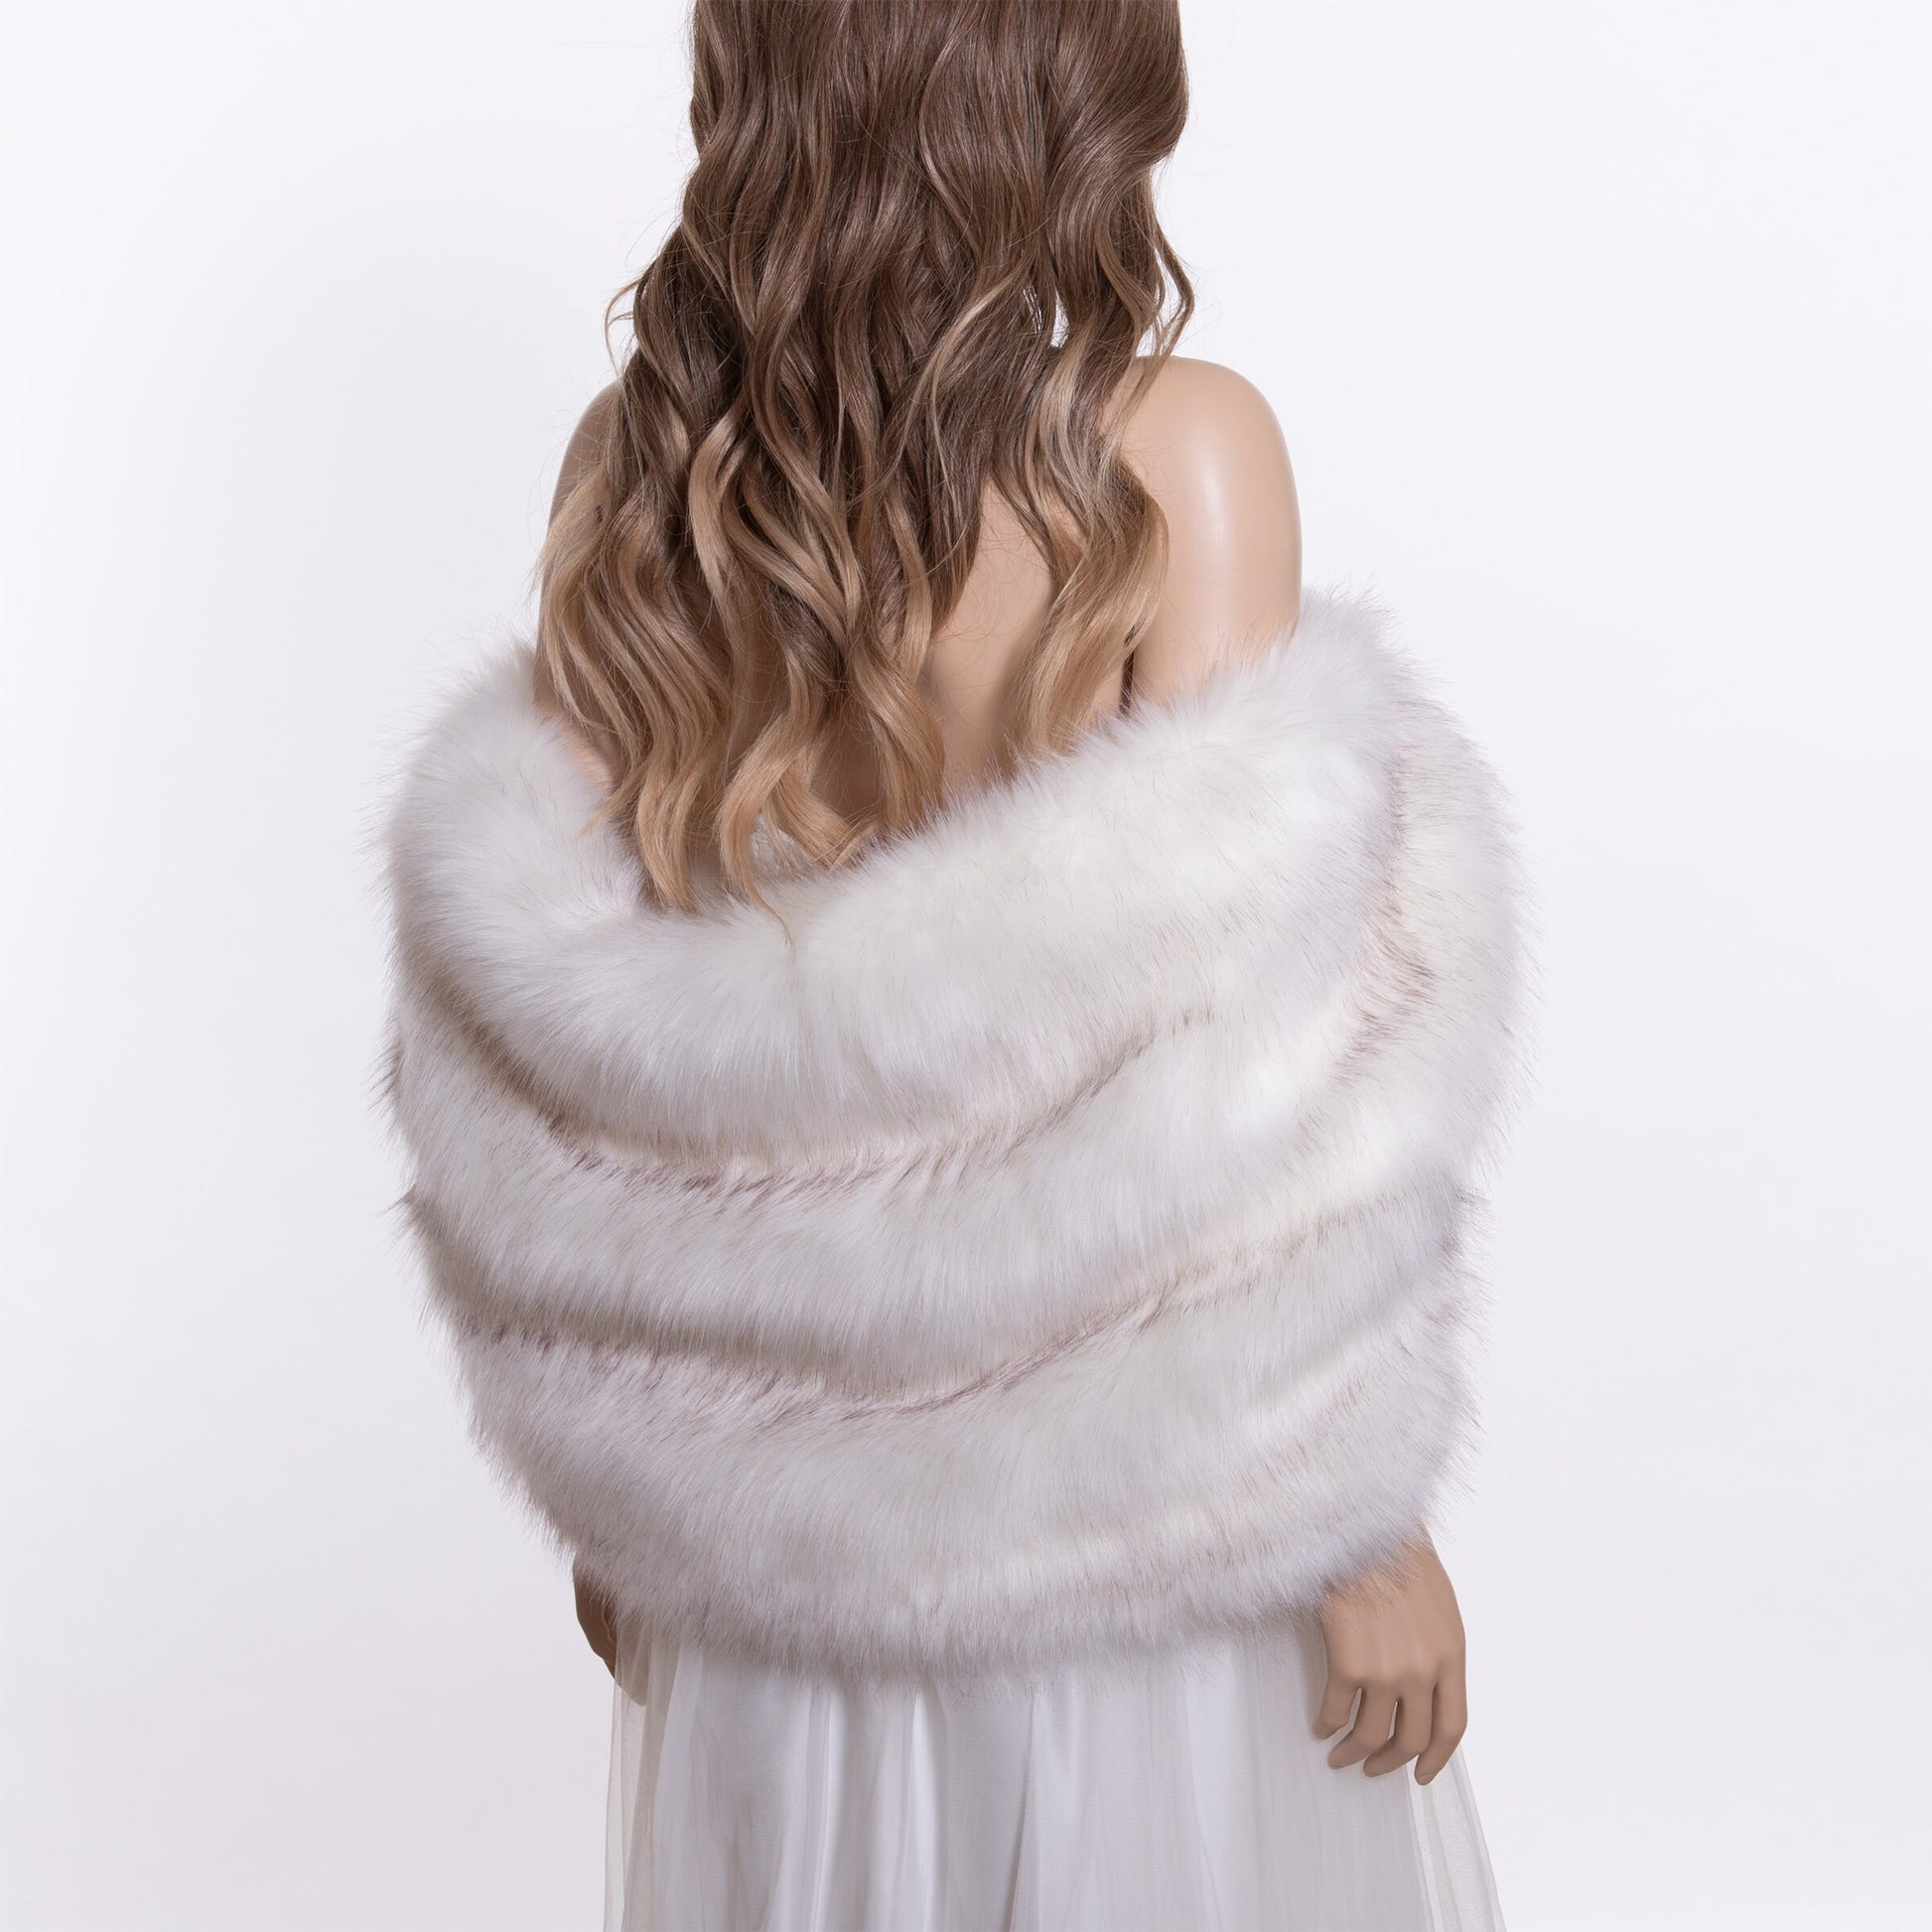 20" wide faux fur shawl light ivory faux fur wrap faux fur shrug wedding faux fur shawl bridal faux fur stole bridal wrap wedding cape